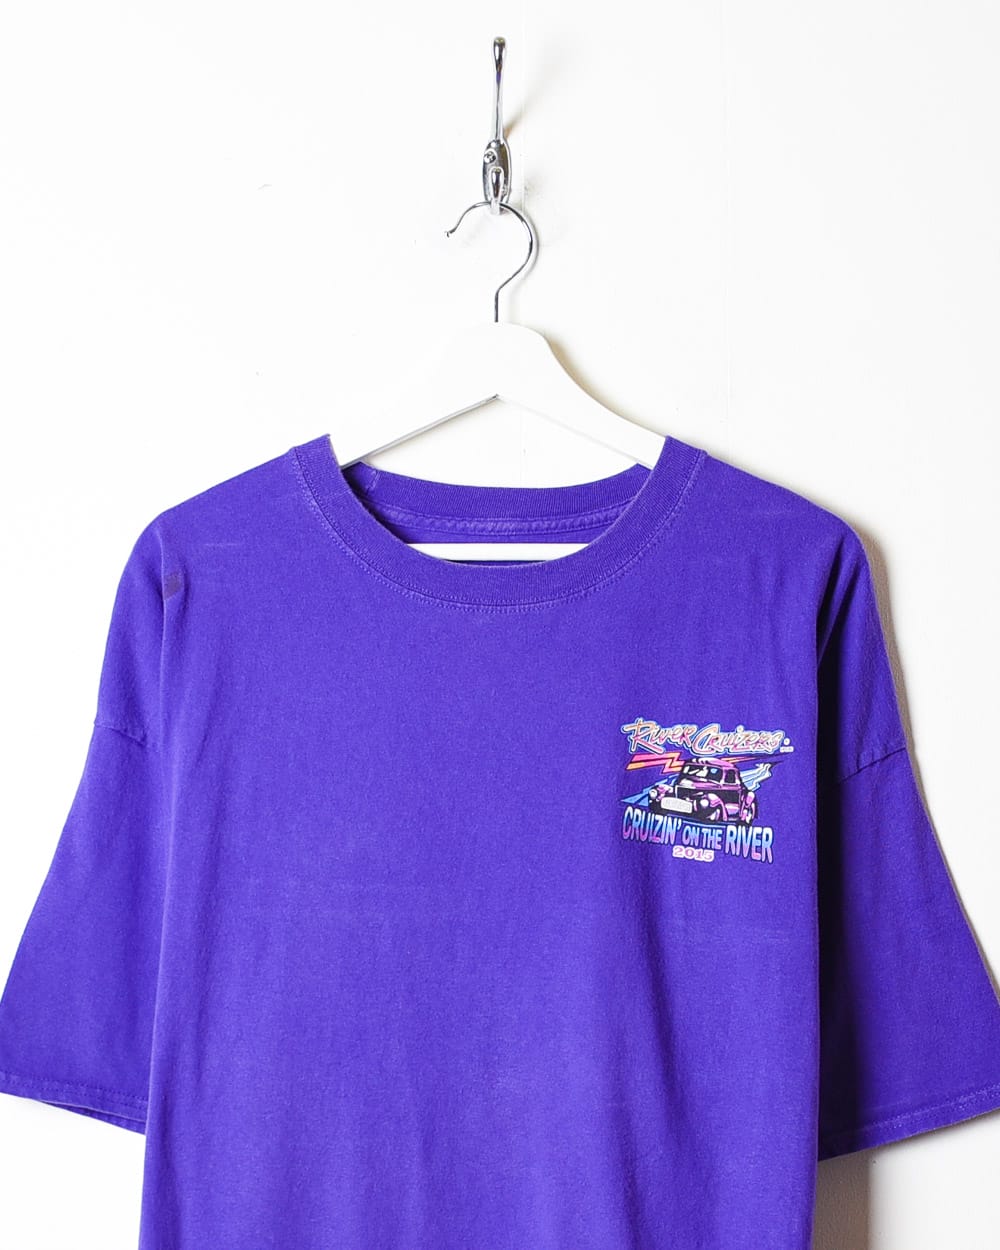 Purple River Cruisers Cruzan' On The River T-Shirt - XX-Large